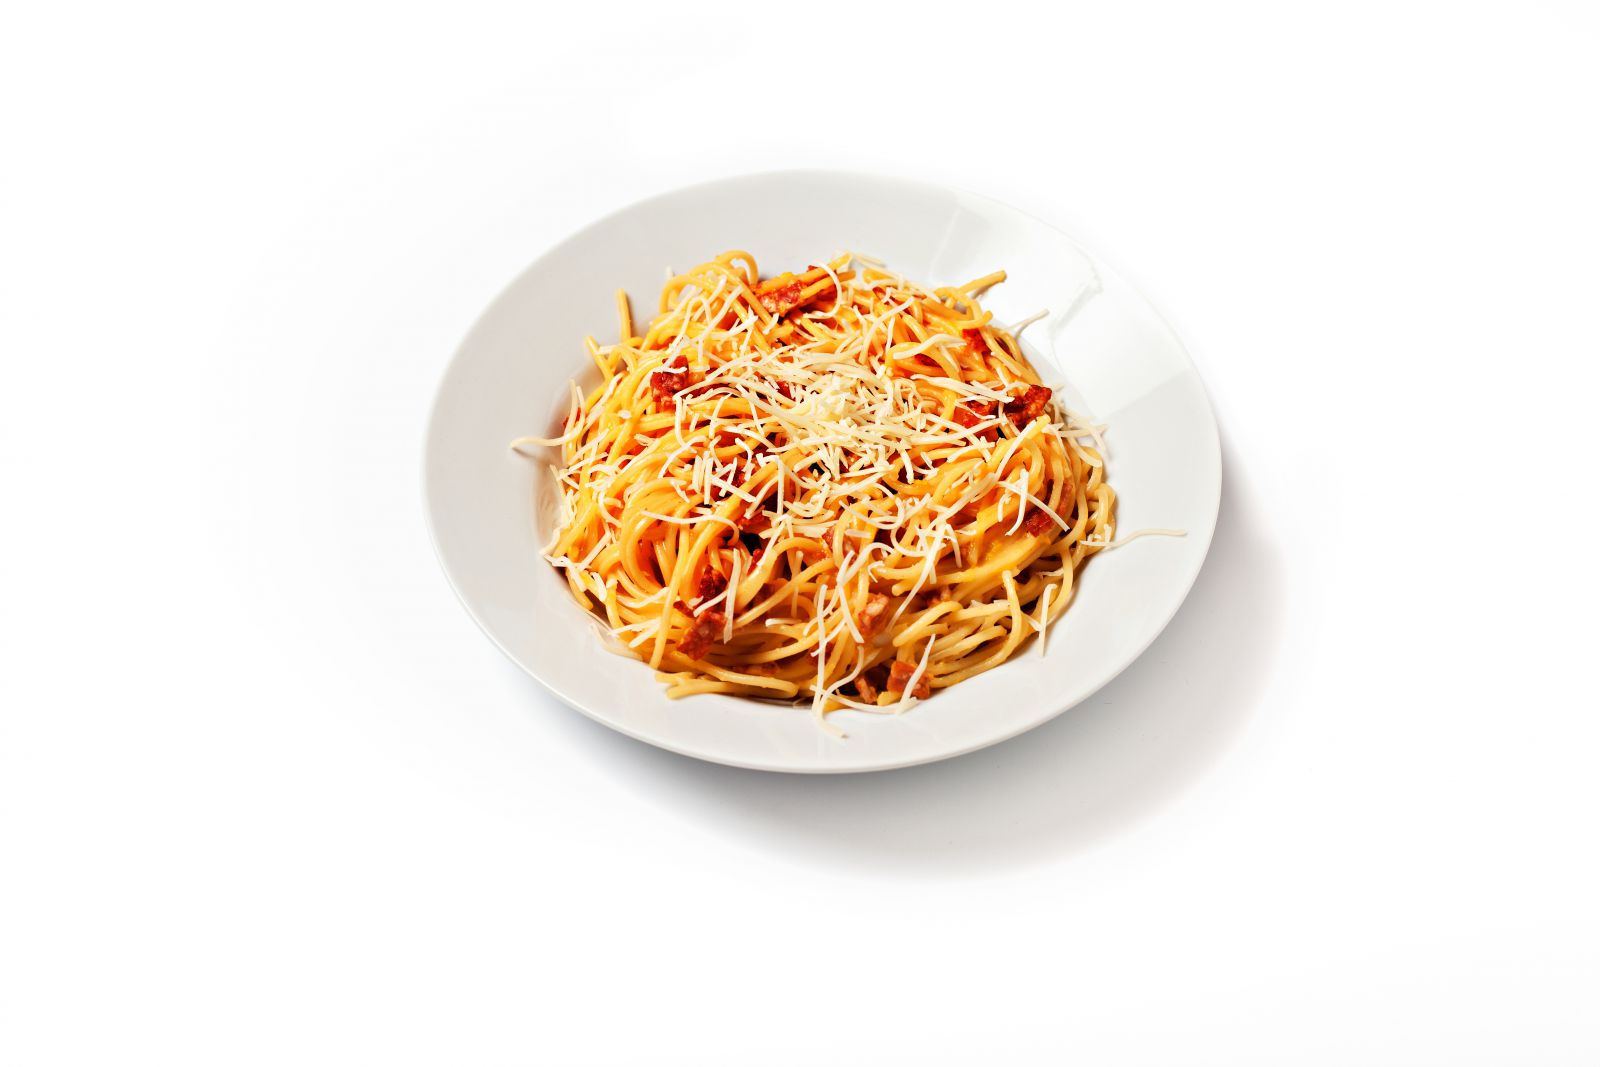 špagety carbonara